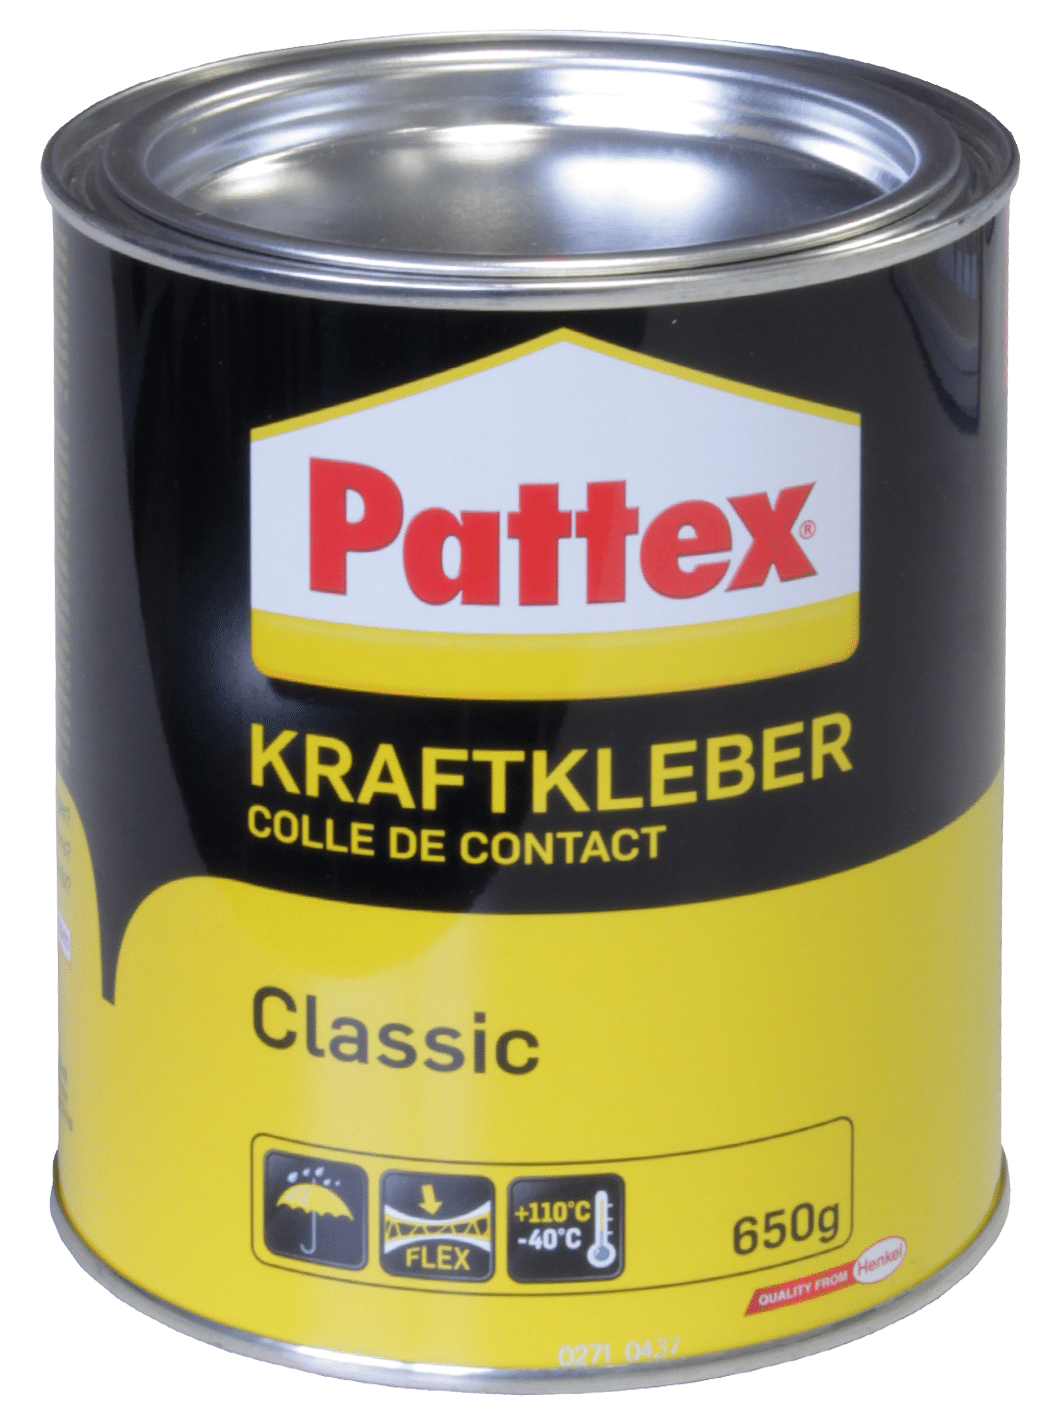 Pattex Kraftkleber